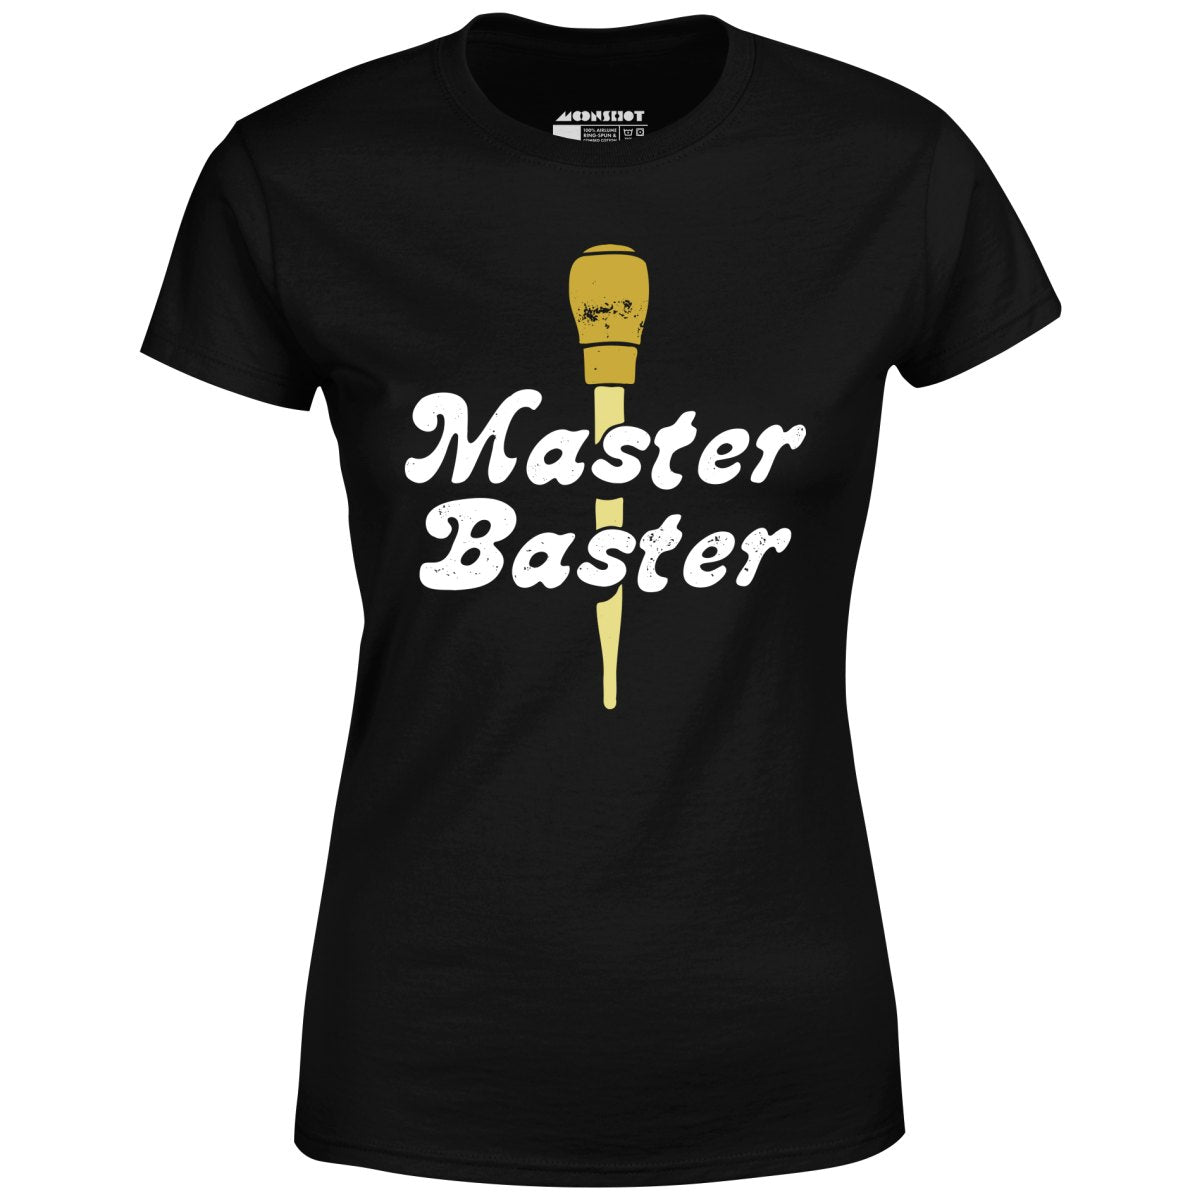 Master Baster - Women's T-Shirt